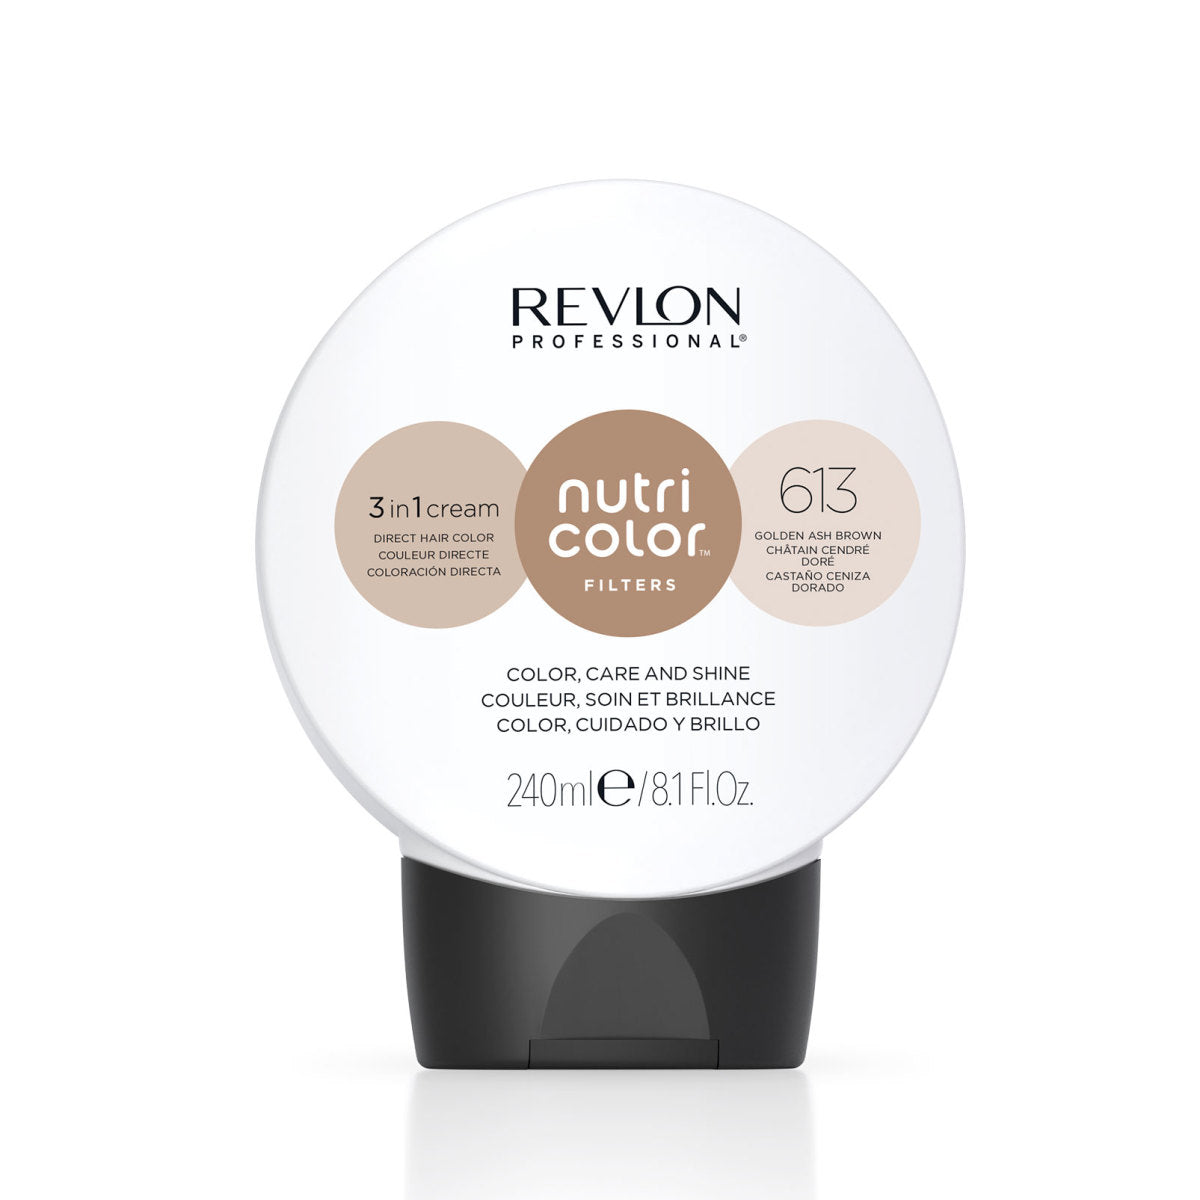 Revlon Pro Nutri Color Filters 613 - Golden Ash Brown 240 ml